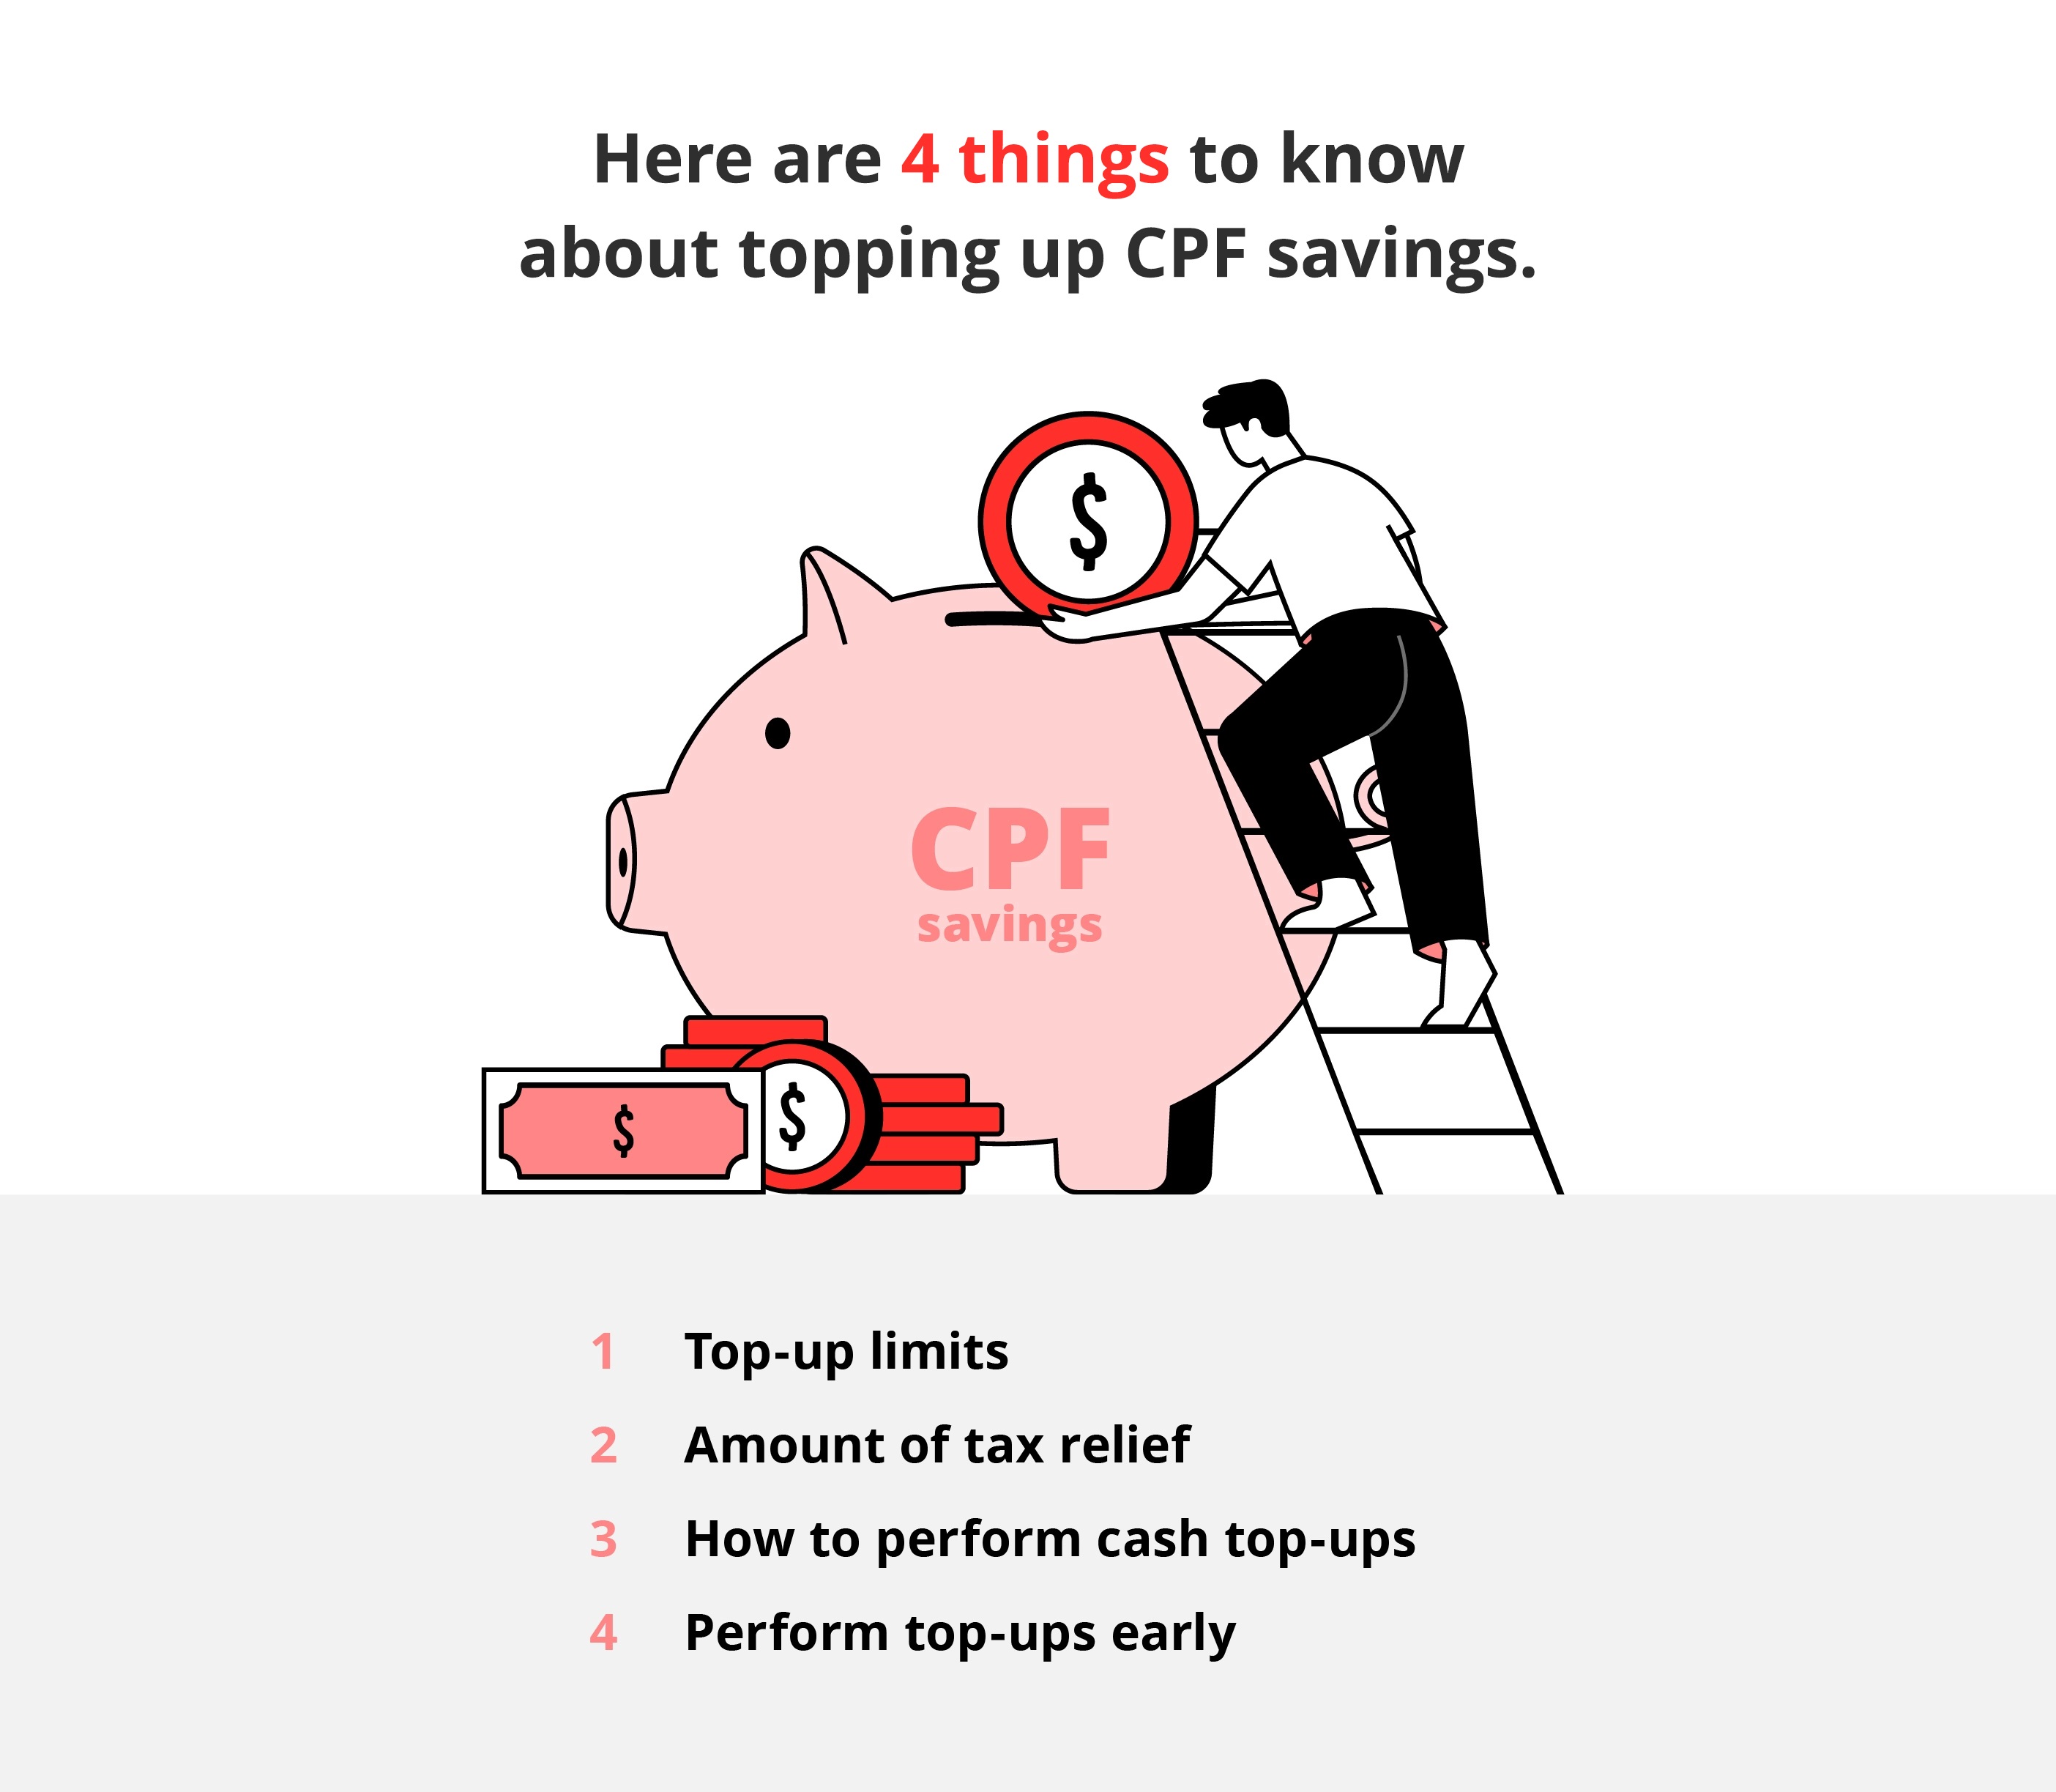 Boosting personal income tax savings